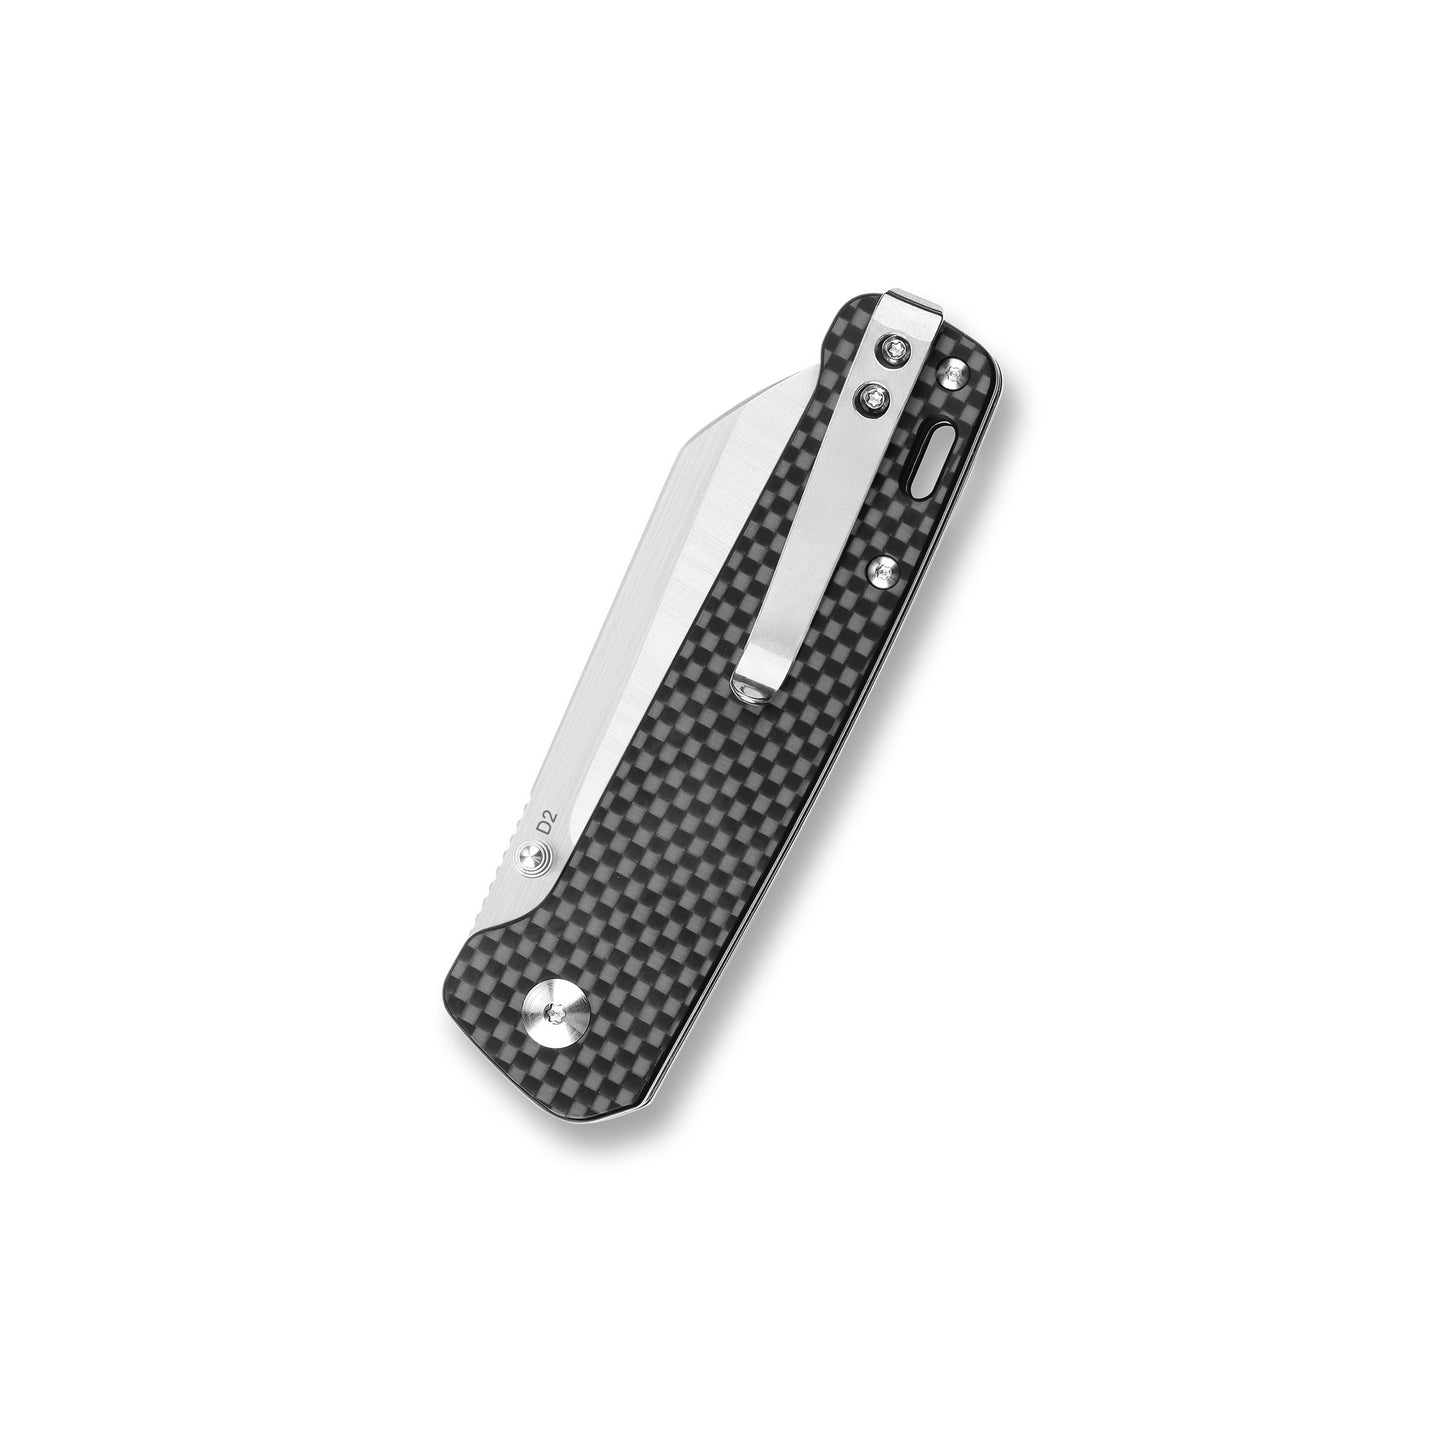 QSP Penguin 3.1" D2 Carbon Fiber G10 Folding Knife QS130-E